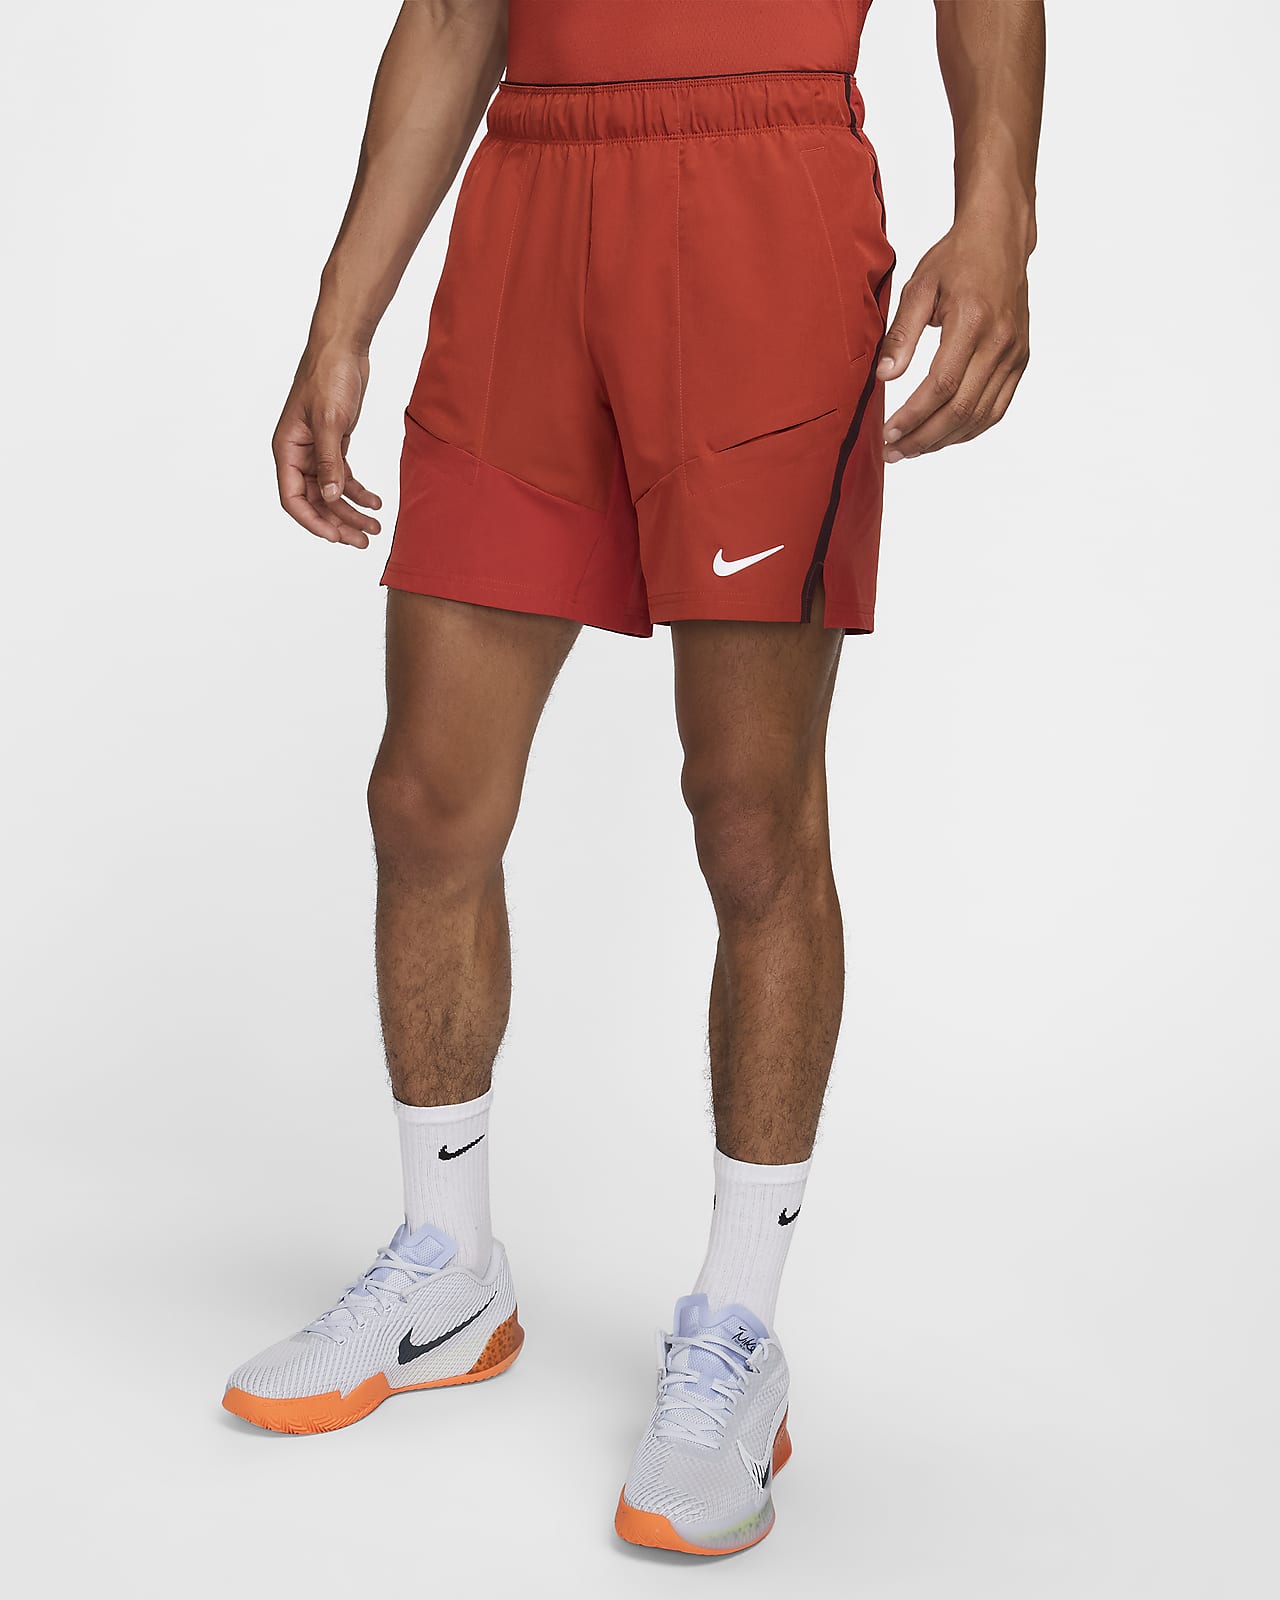 NikeCourt Advantage Men's Dri-FIT 7" Tennis Shorts